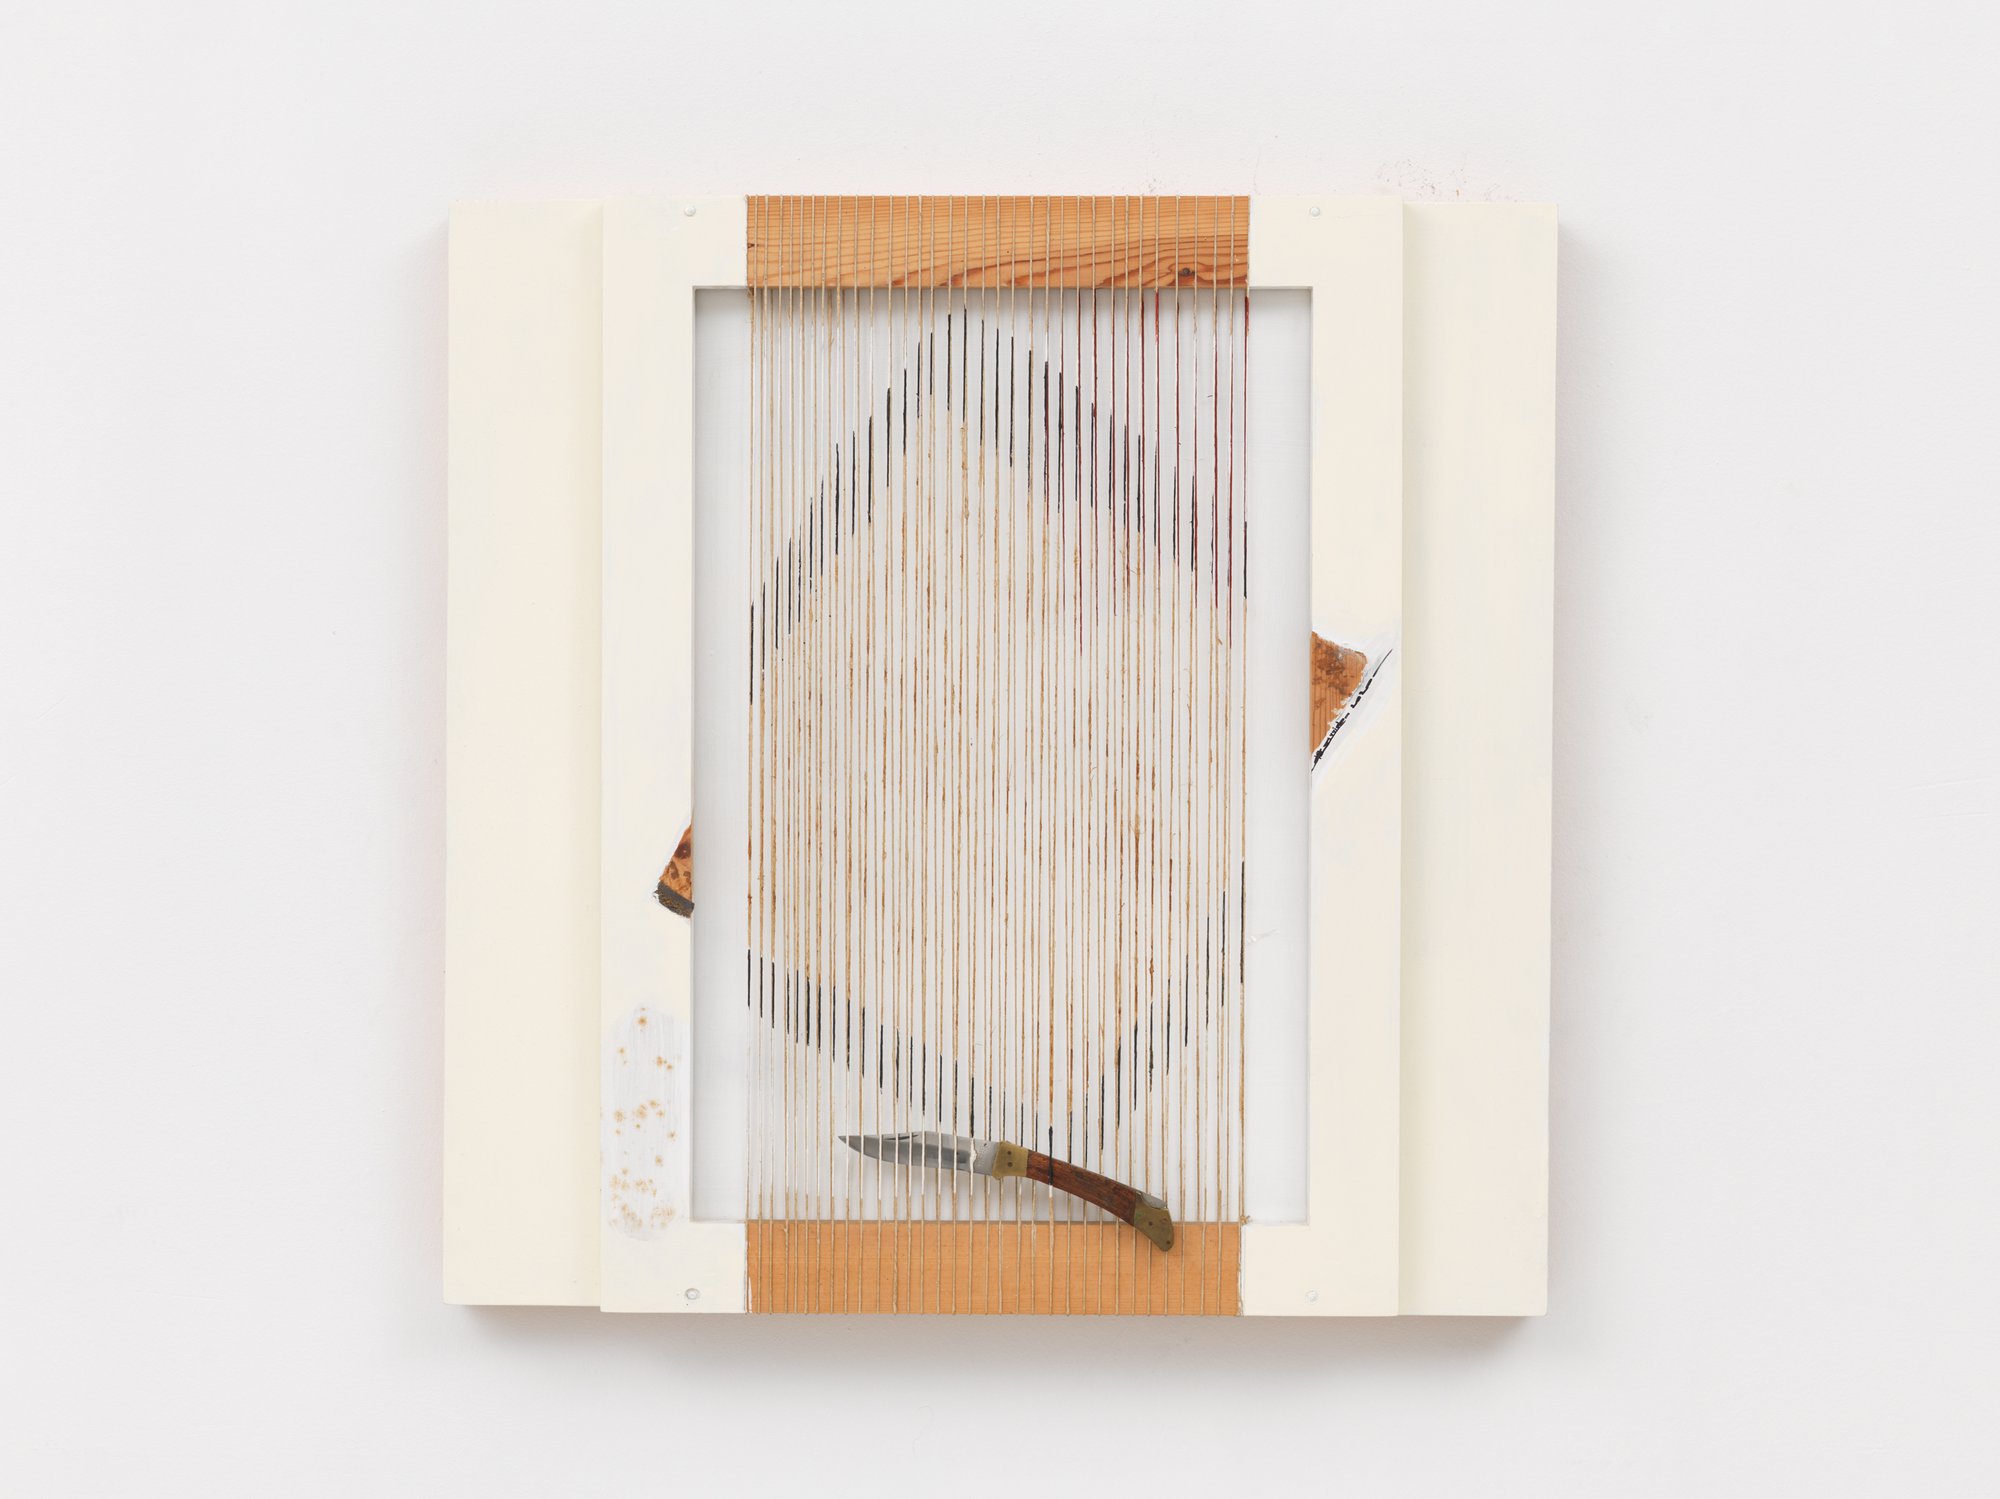 Koula Savvidou, Untitled, wood, string, picket knife, oil paint, 70 x 70 x 10.5 cm (27 1/2 x 27 1/2 x 4 1/8 in), 2021